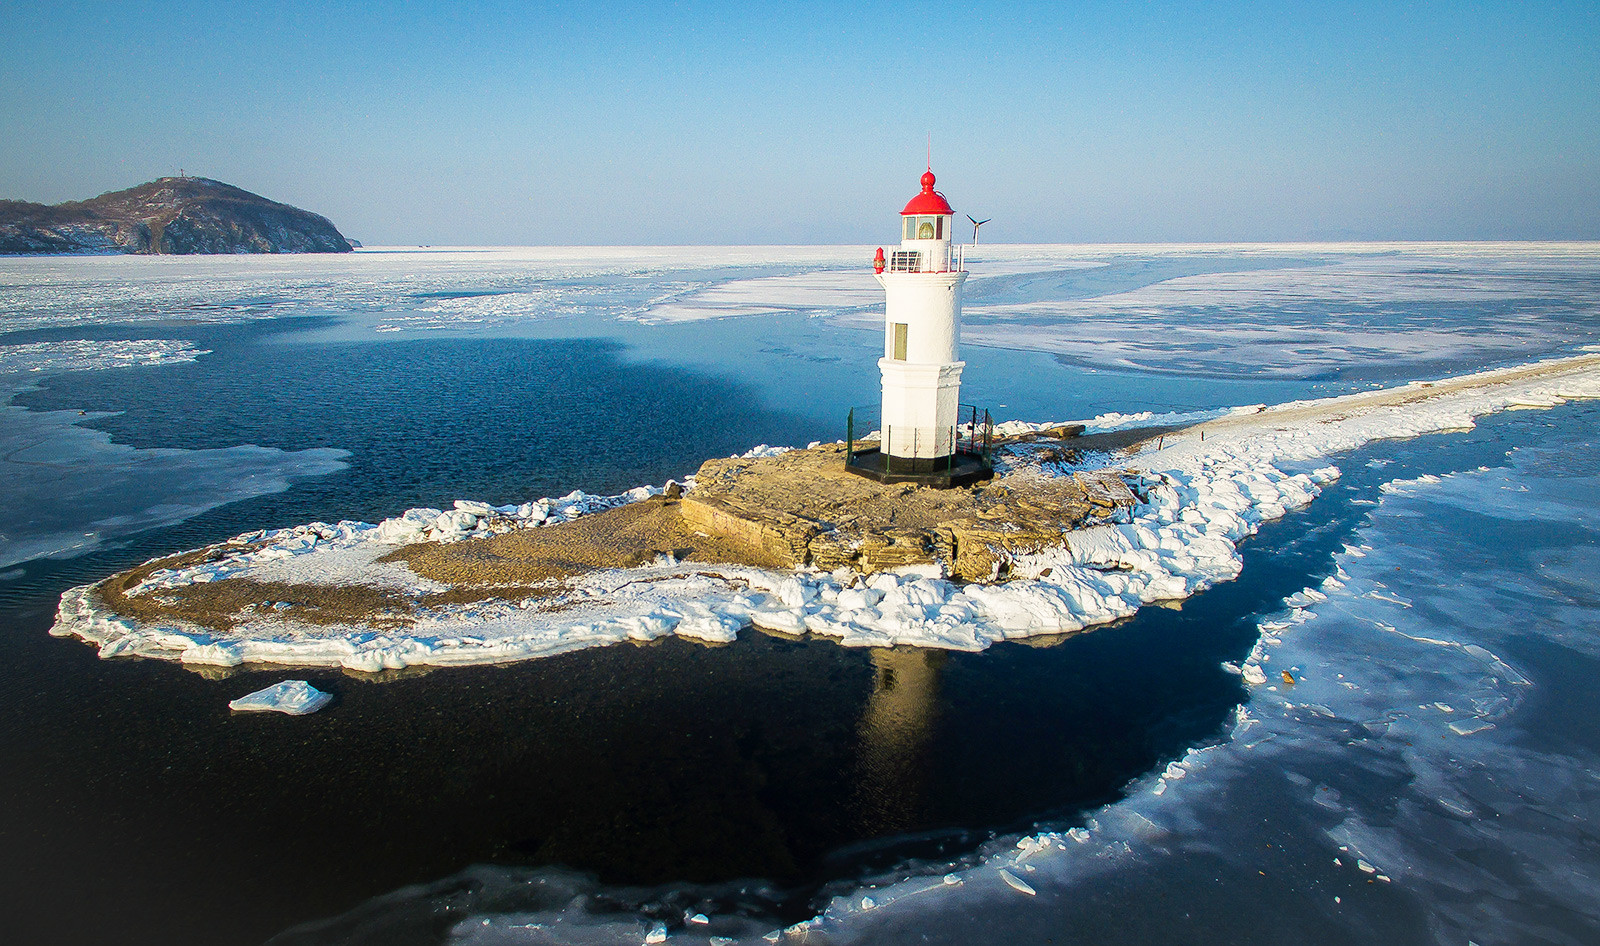 Tokarevsky Lighthouse